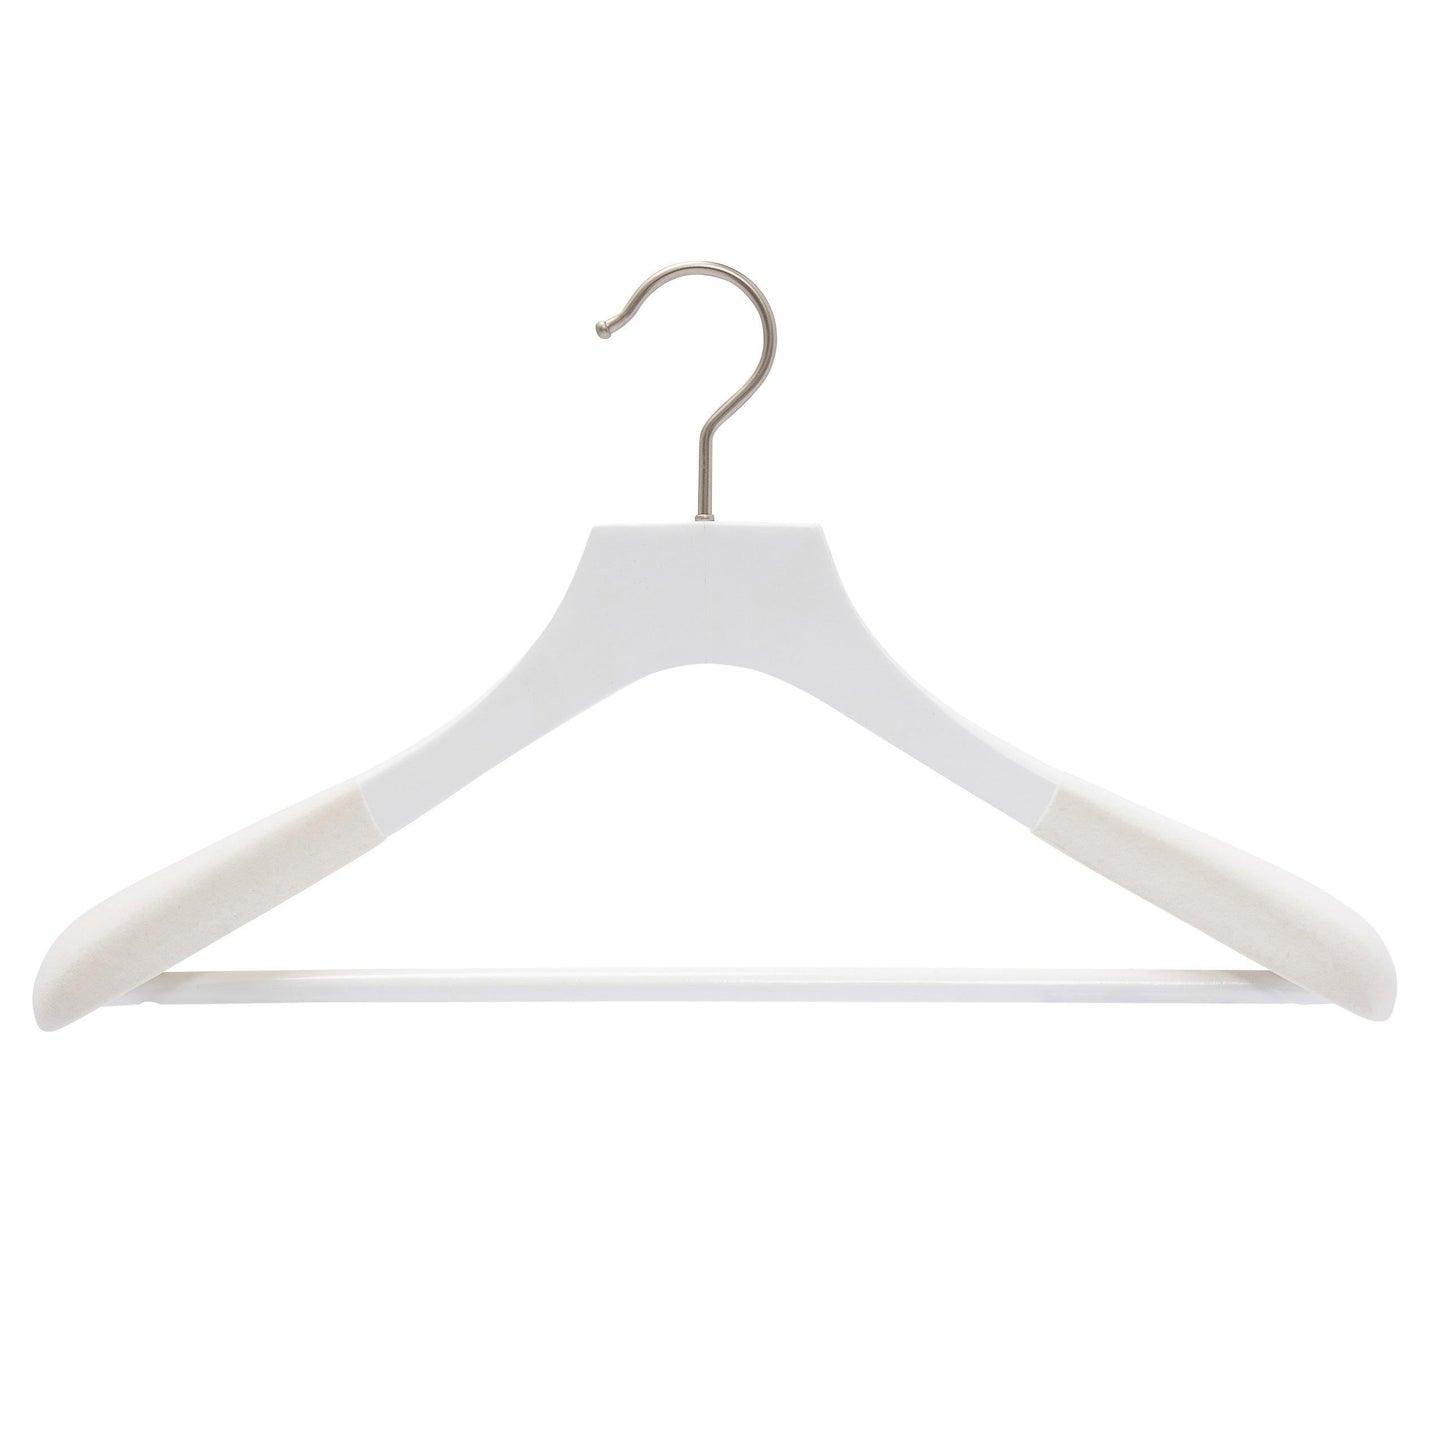 White Wood Coat Hanger With Bar - 46cm X 50mm Thick Shoulders with White Velvet Coating Sold 2/6/10/20 - Hangersforless